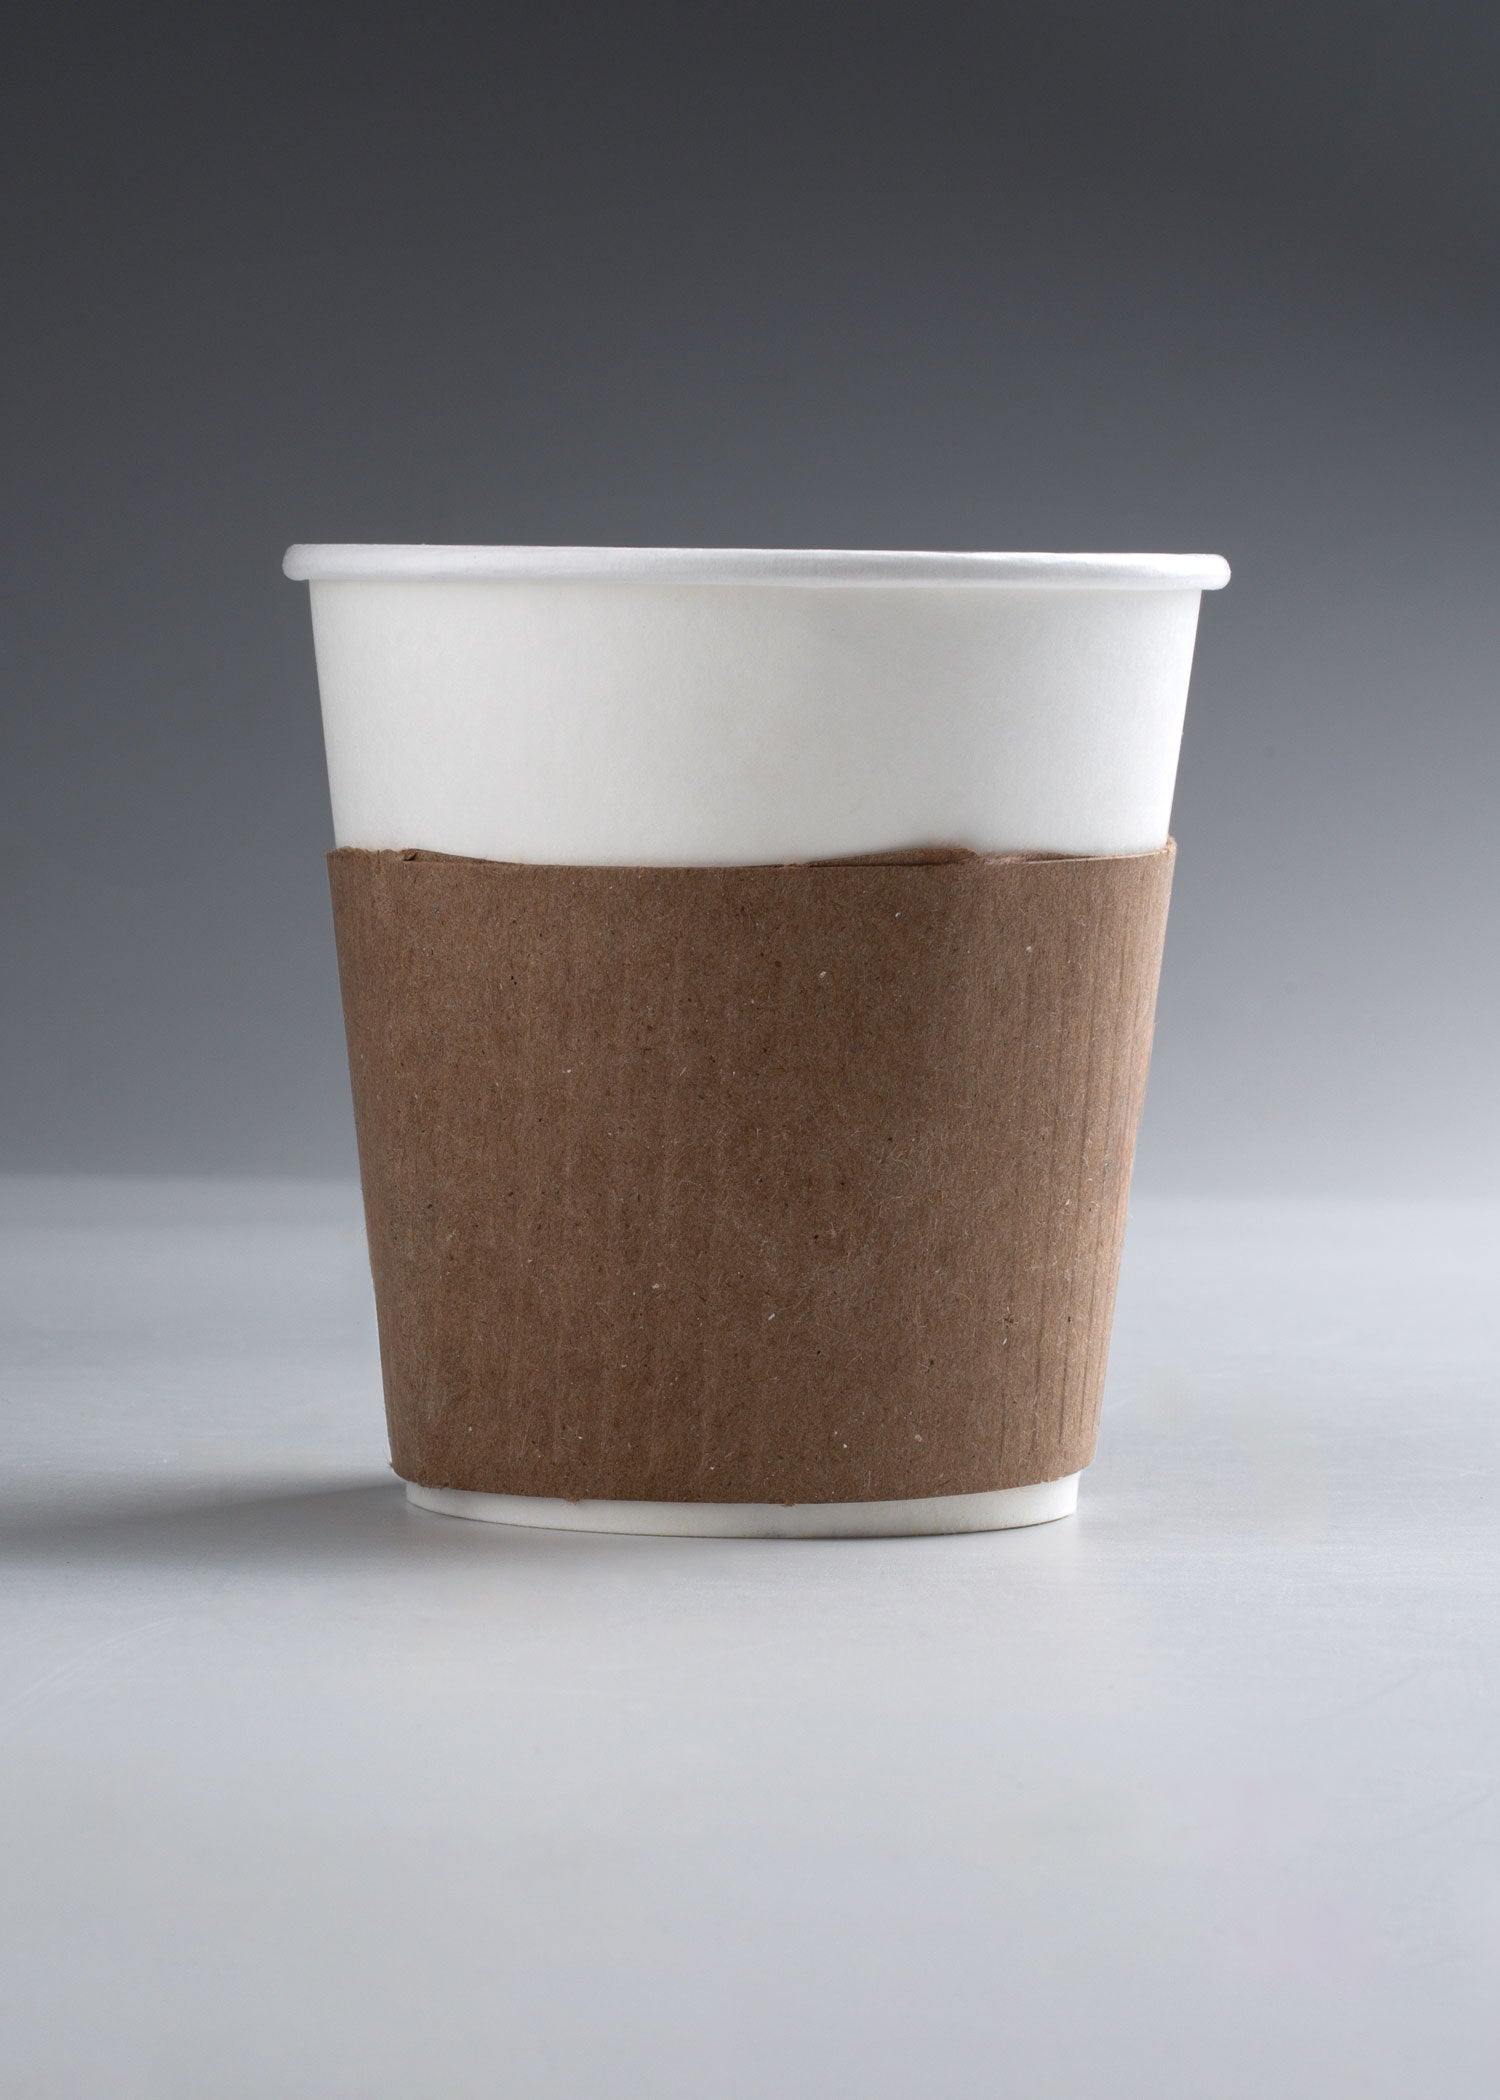 fajilla cafe carton apar vaso de papel maha